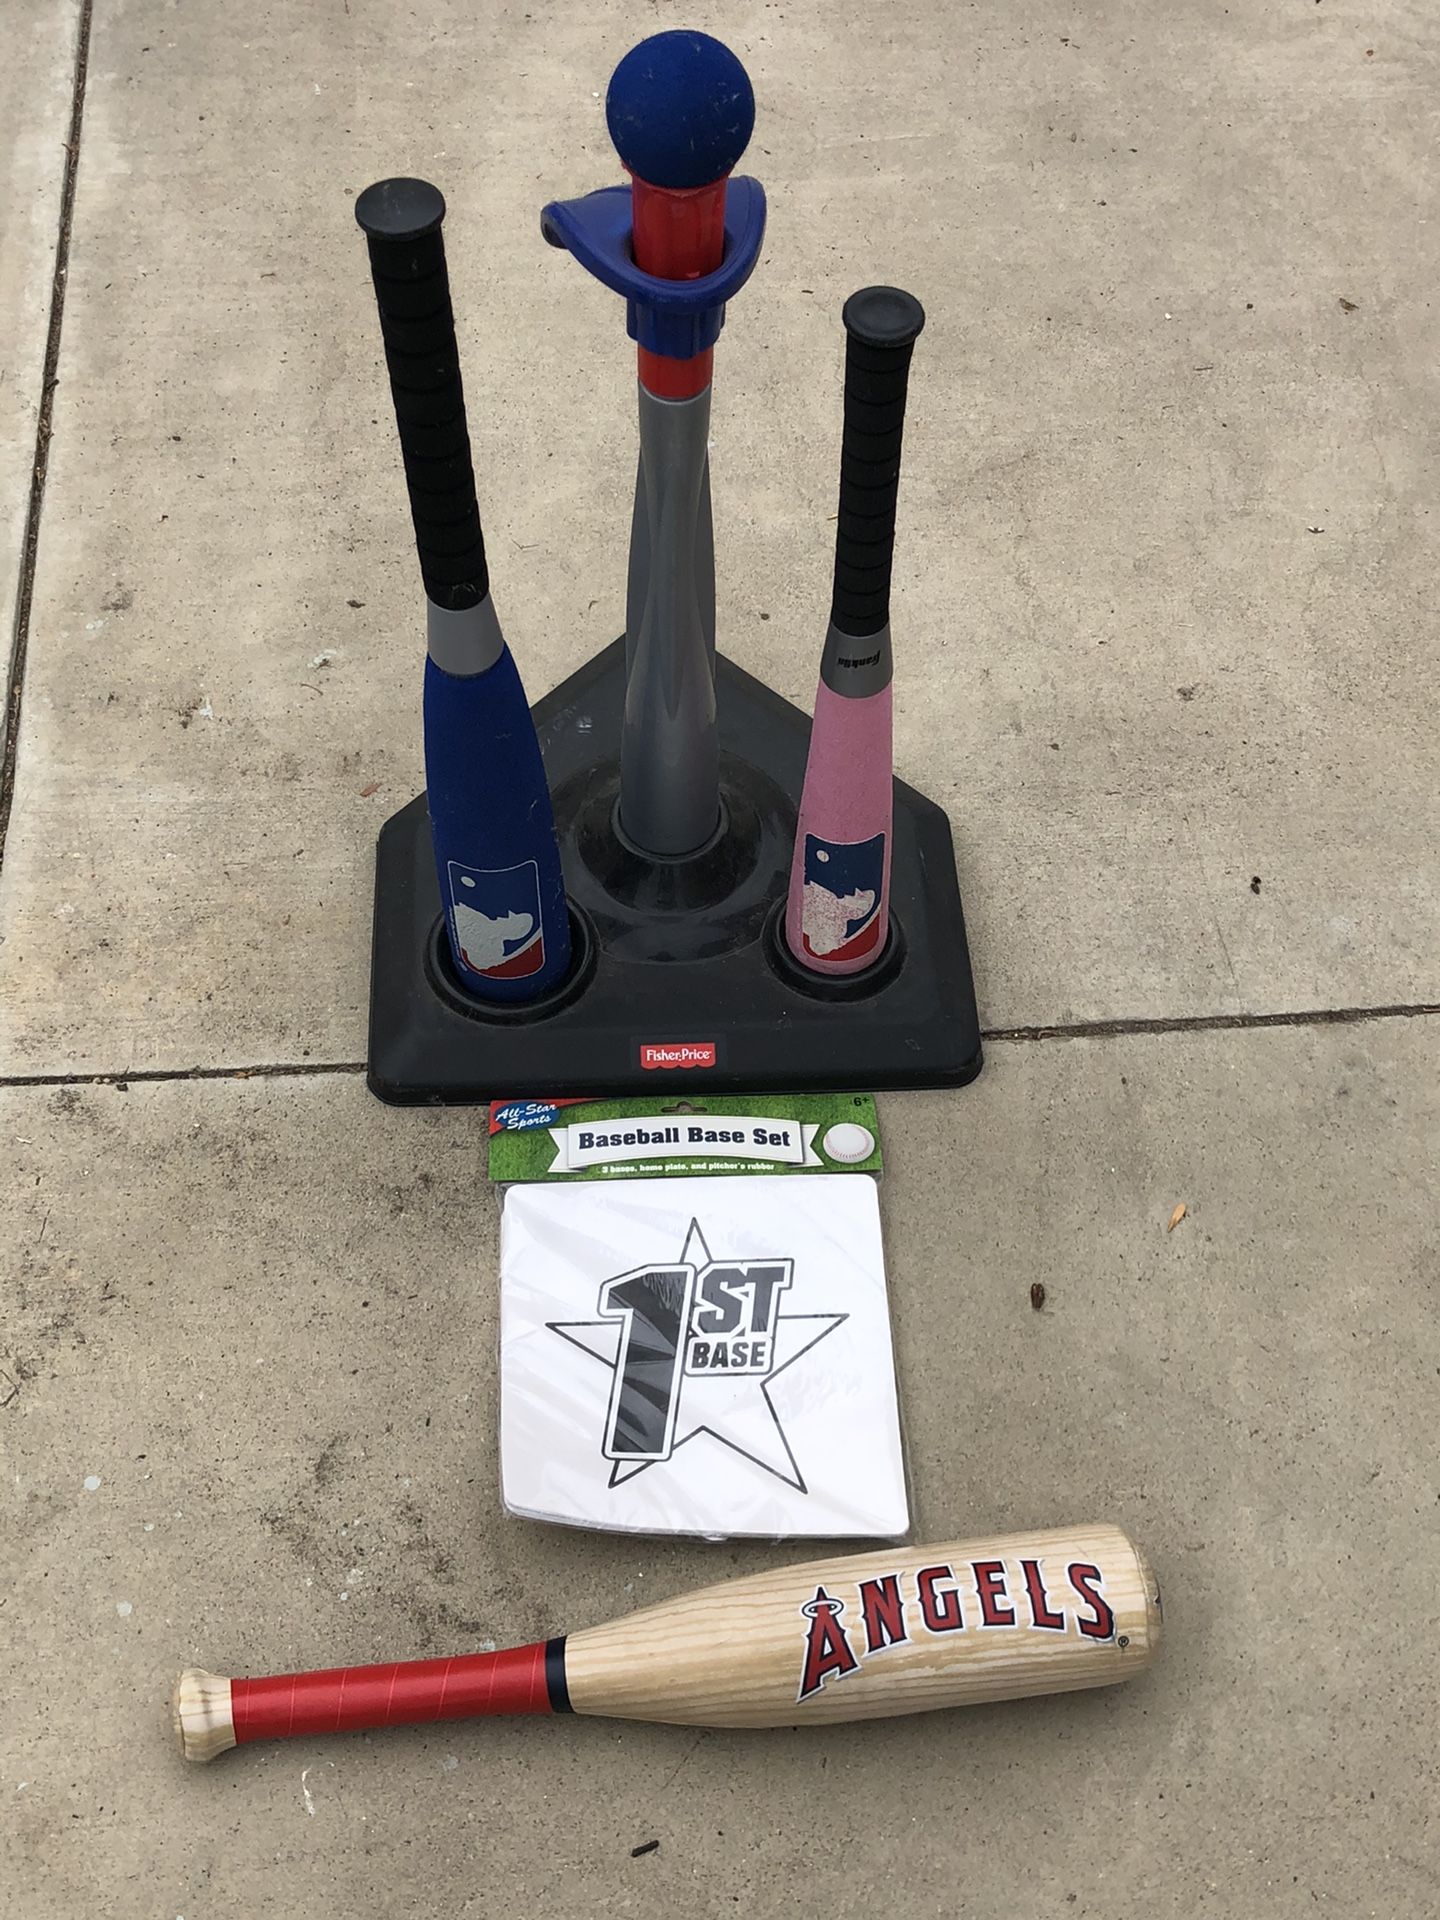 Baseball tee and bat set